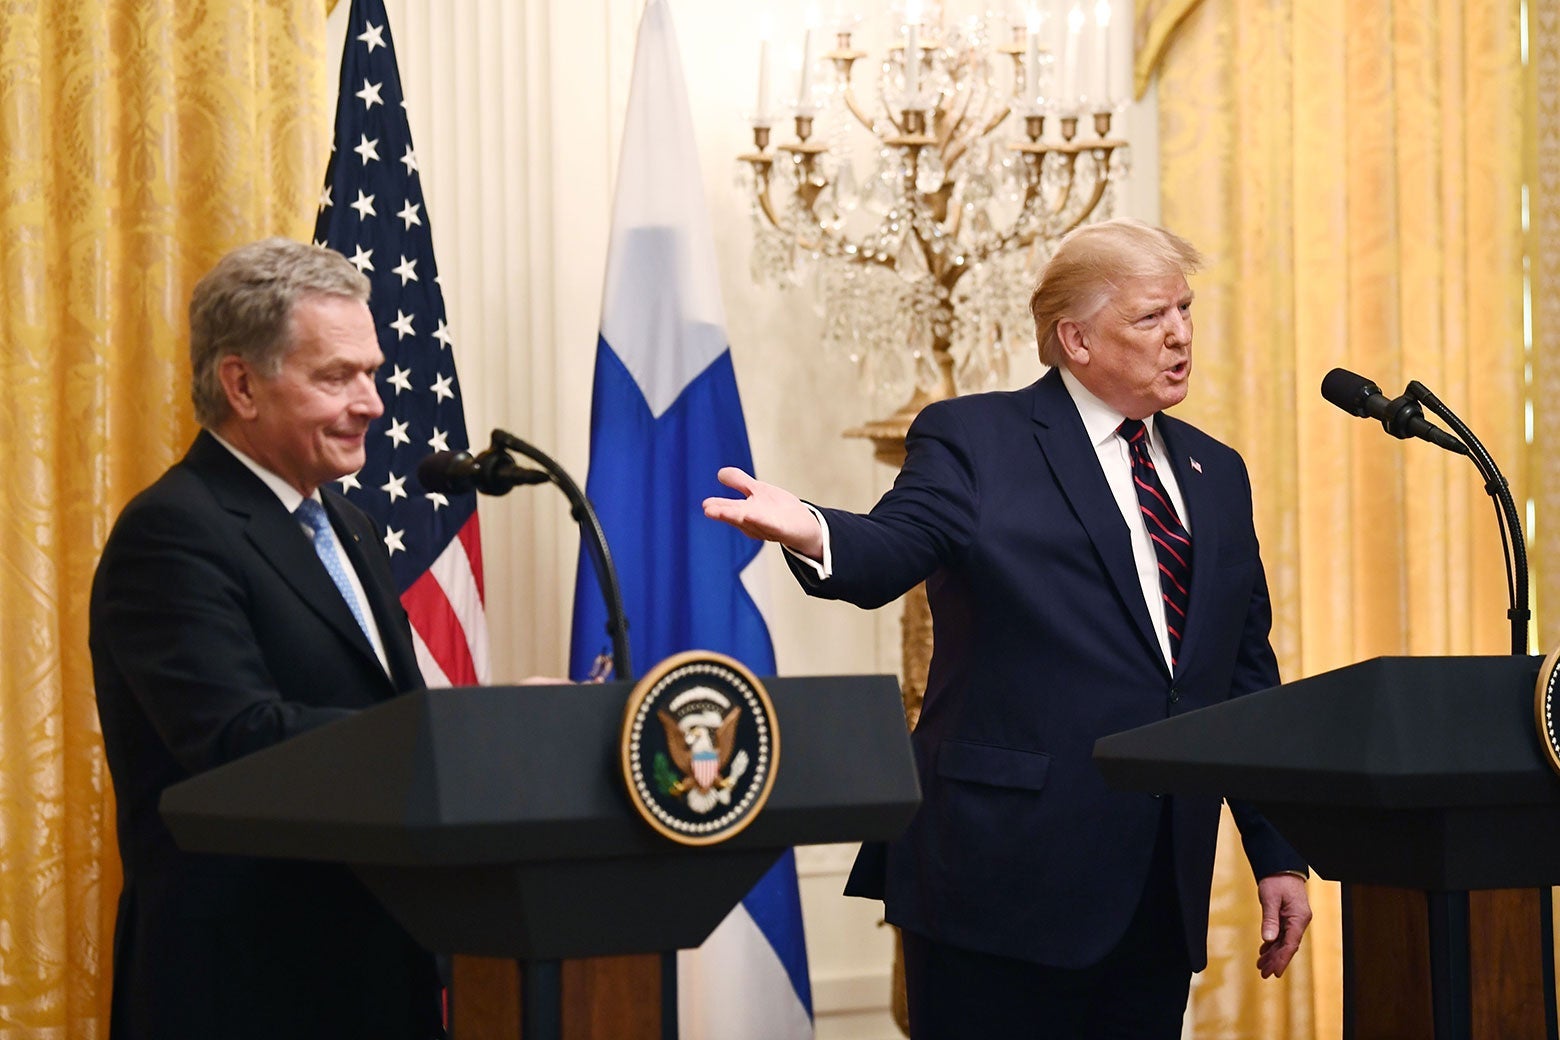 Finnish President Sauli Niinistö and U.S. President Donald Trump at the White House in Washington on Wednesday.